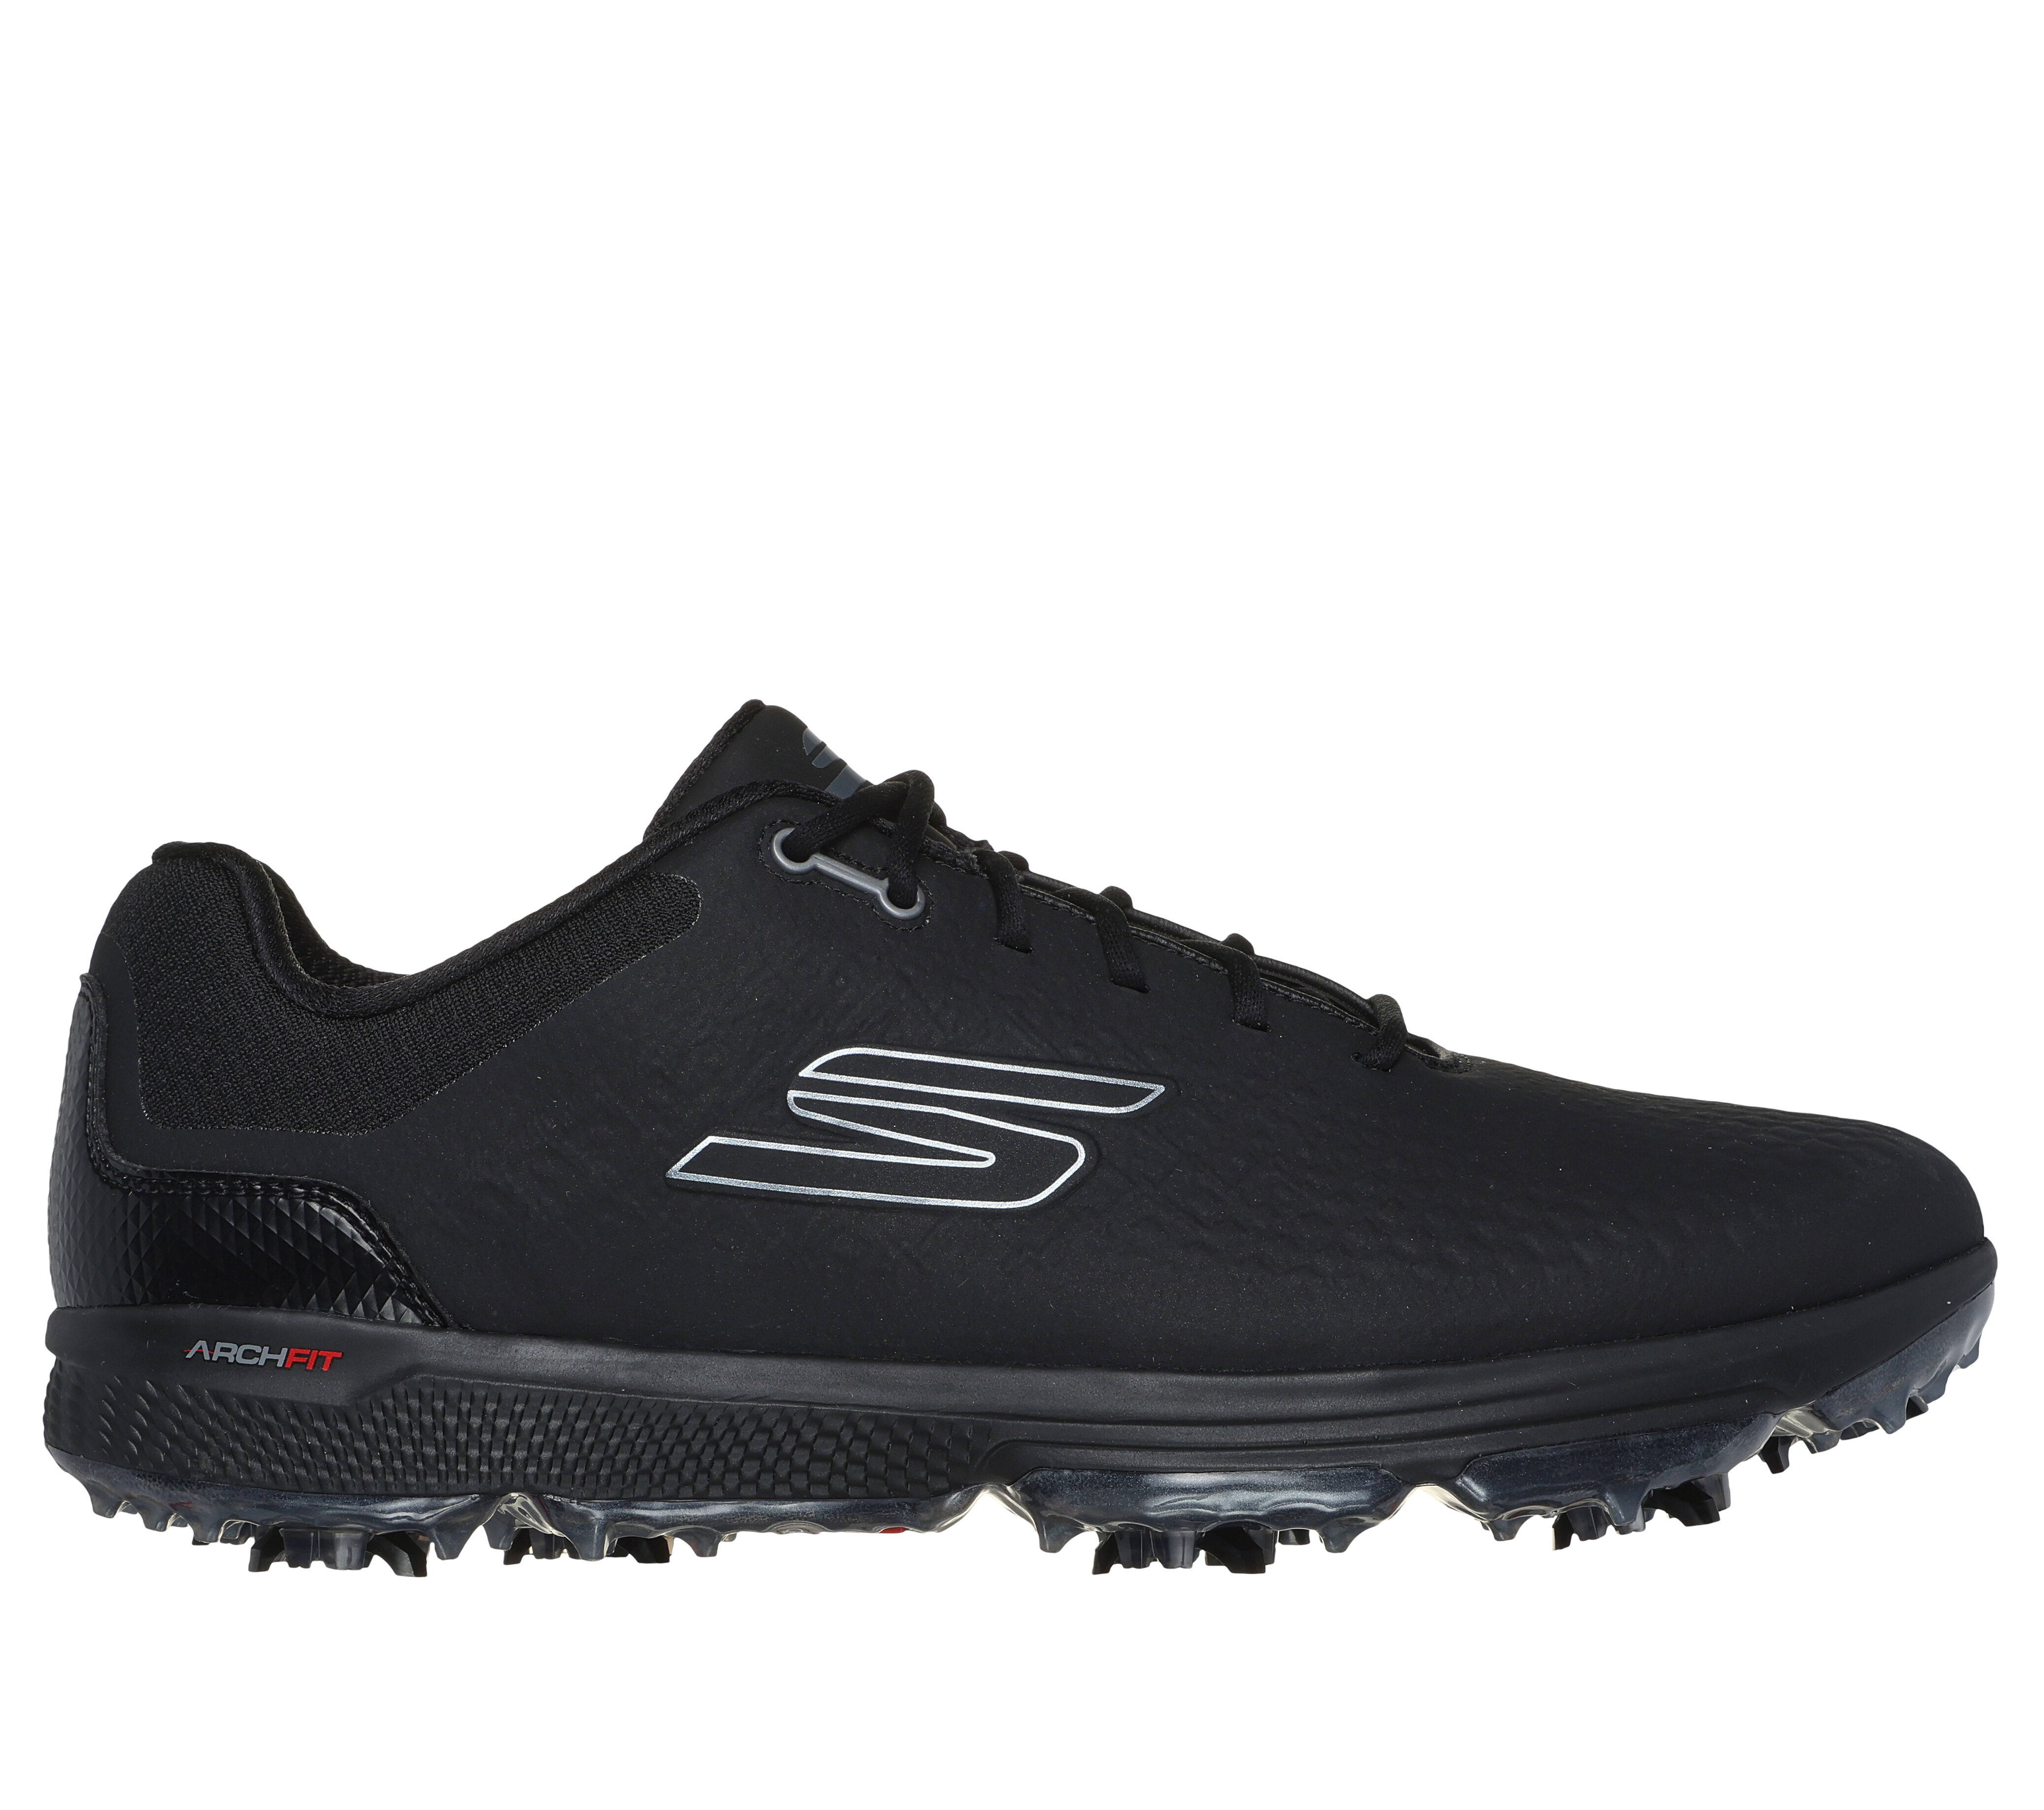 Skechers Men´s Max 2 Arch Fit Waterproof Spikeless Golf Shoe